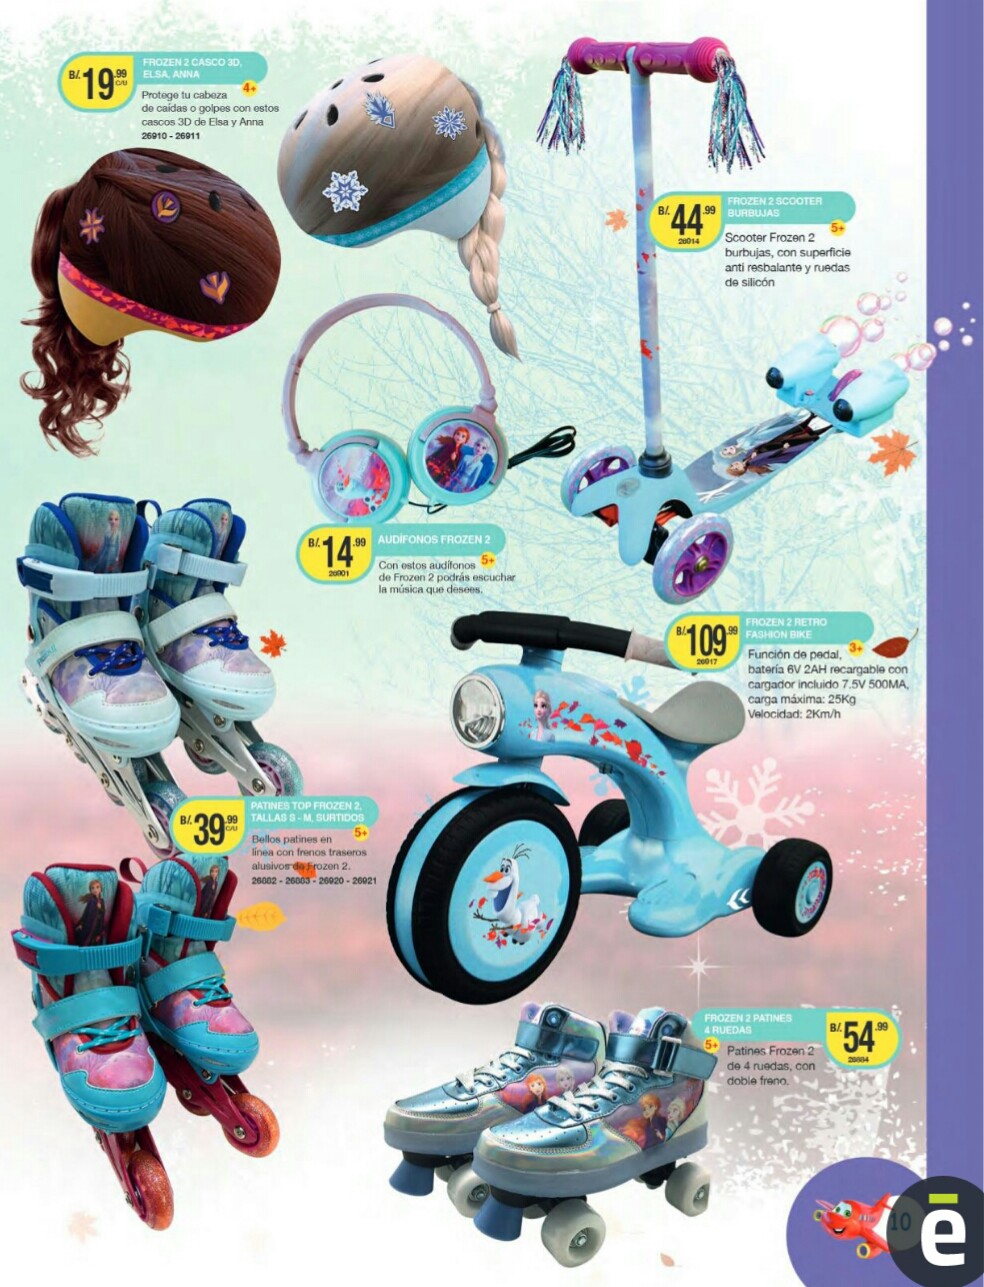 Catalogo juguetes Titan Toys 2019 p10